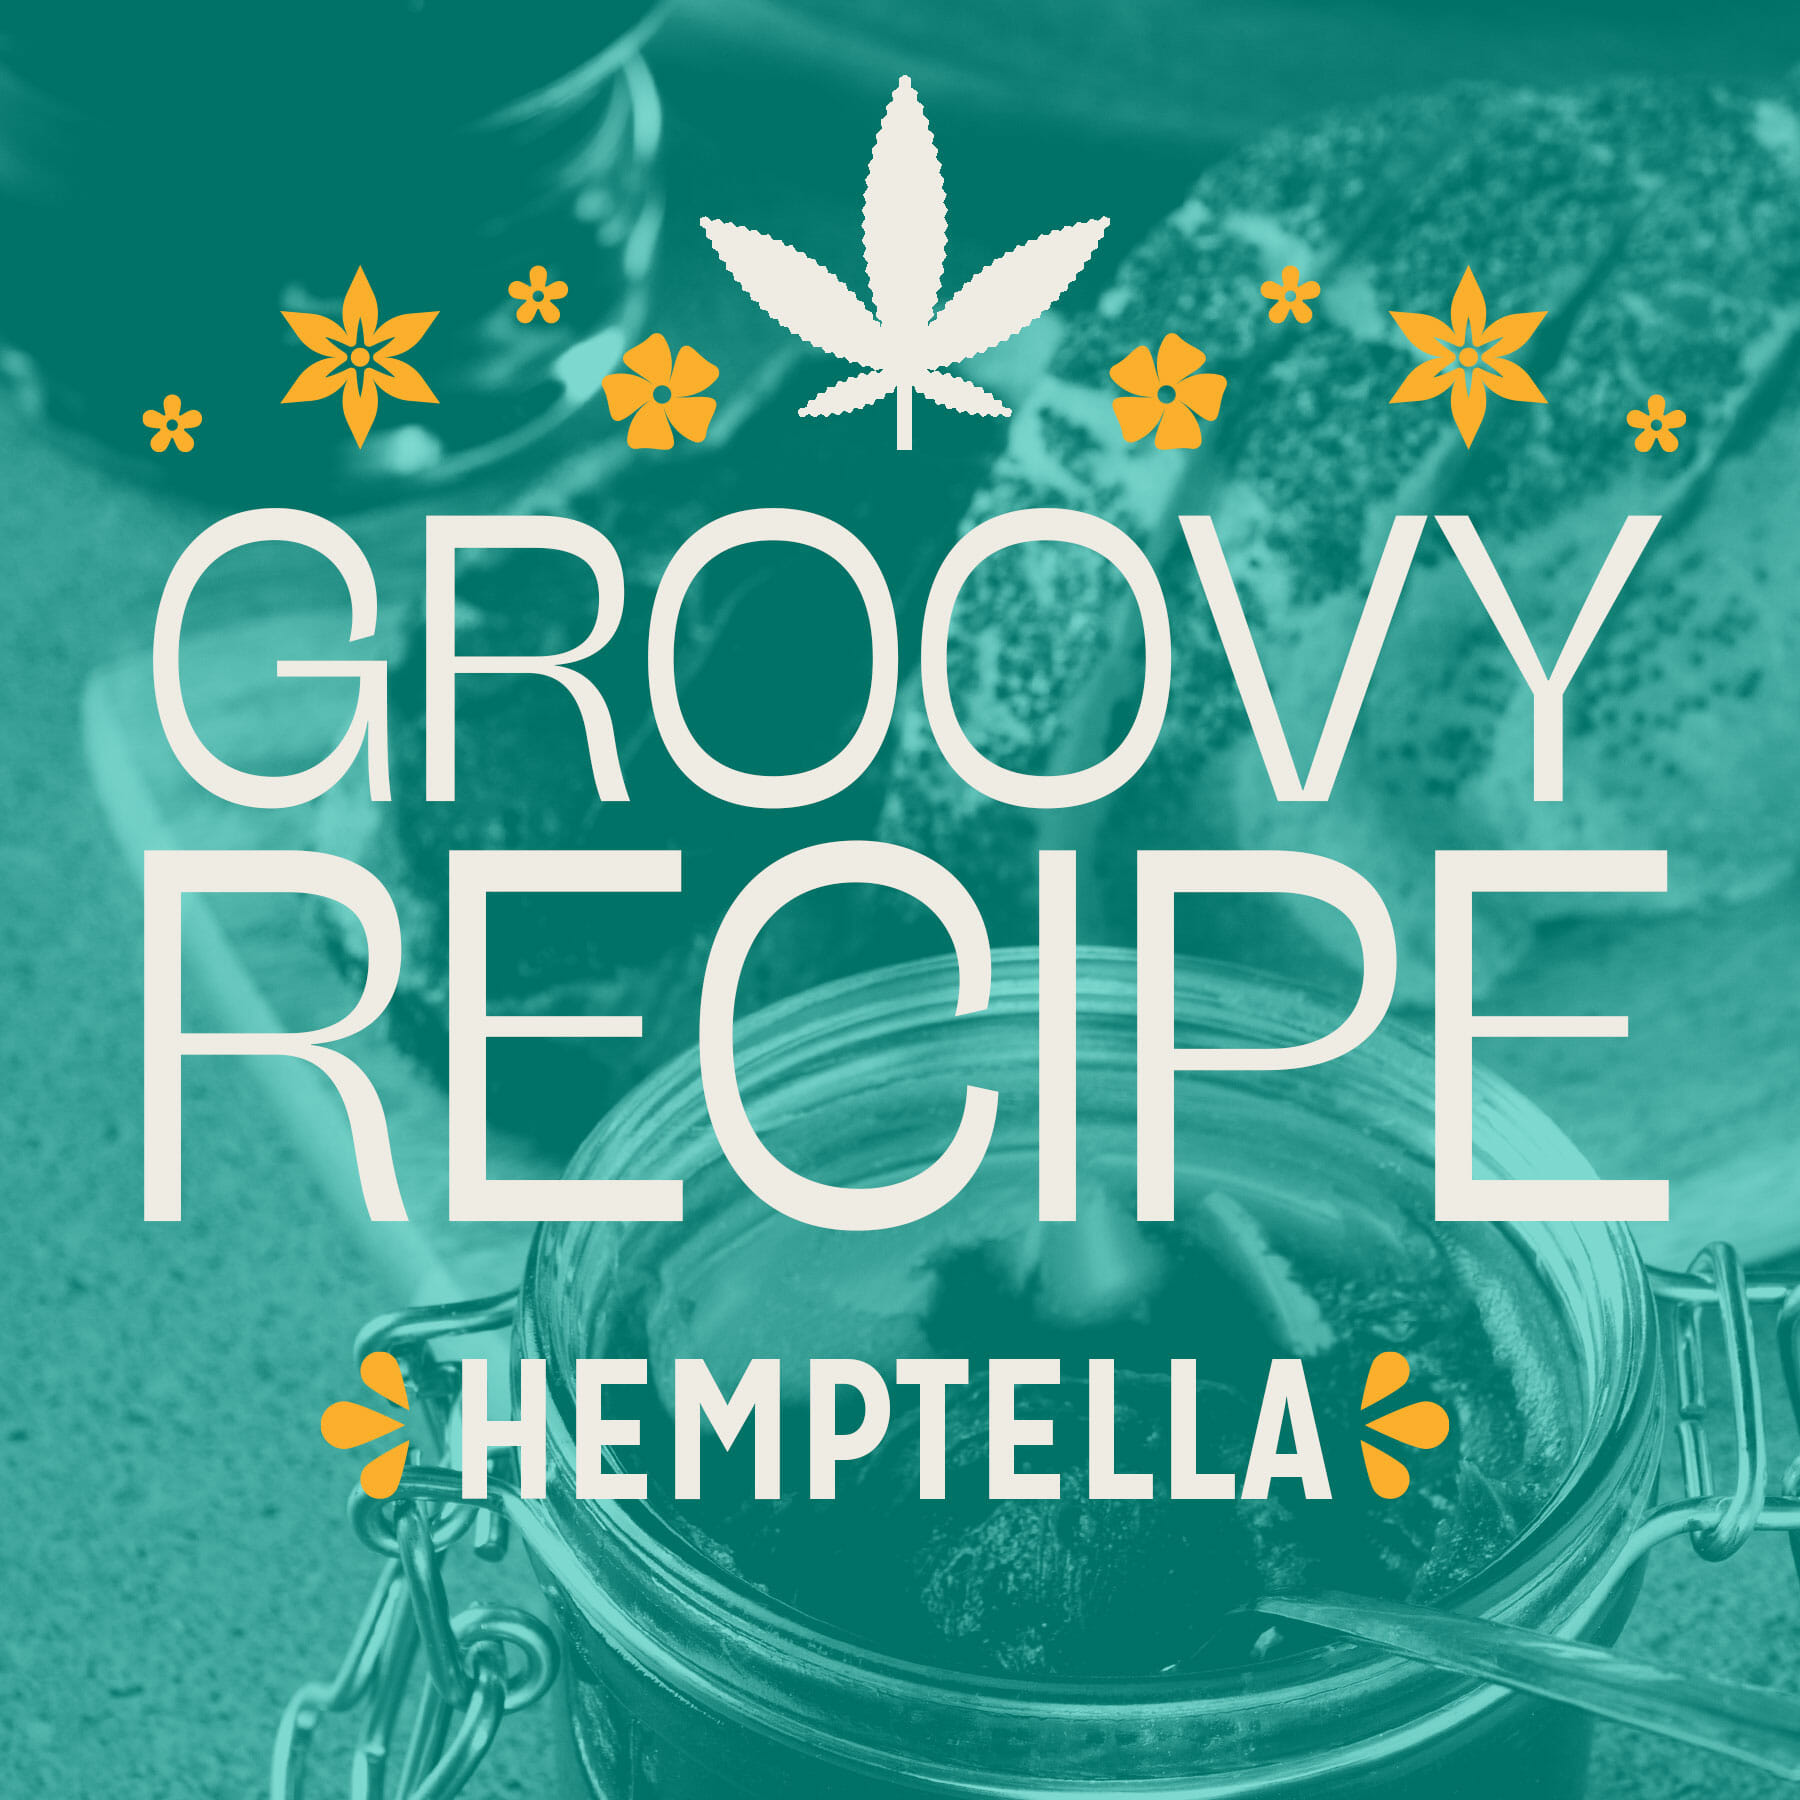 Hemptella Chocolate Spread Vegan Recipe